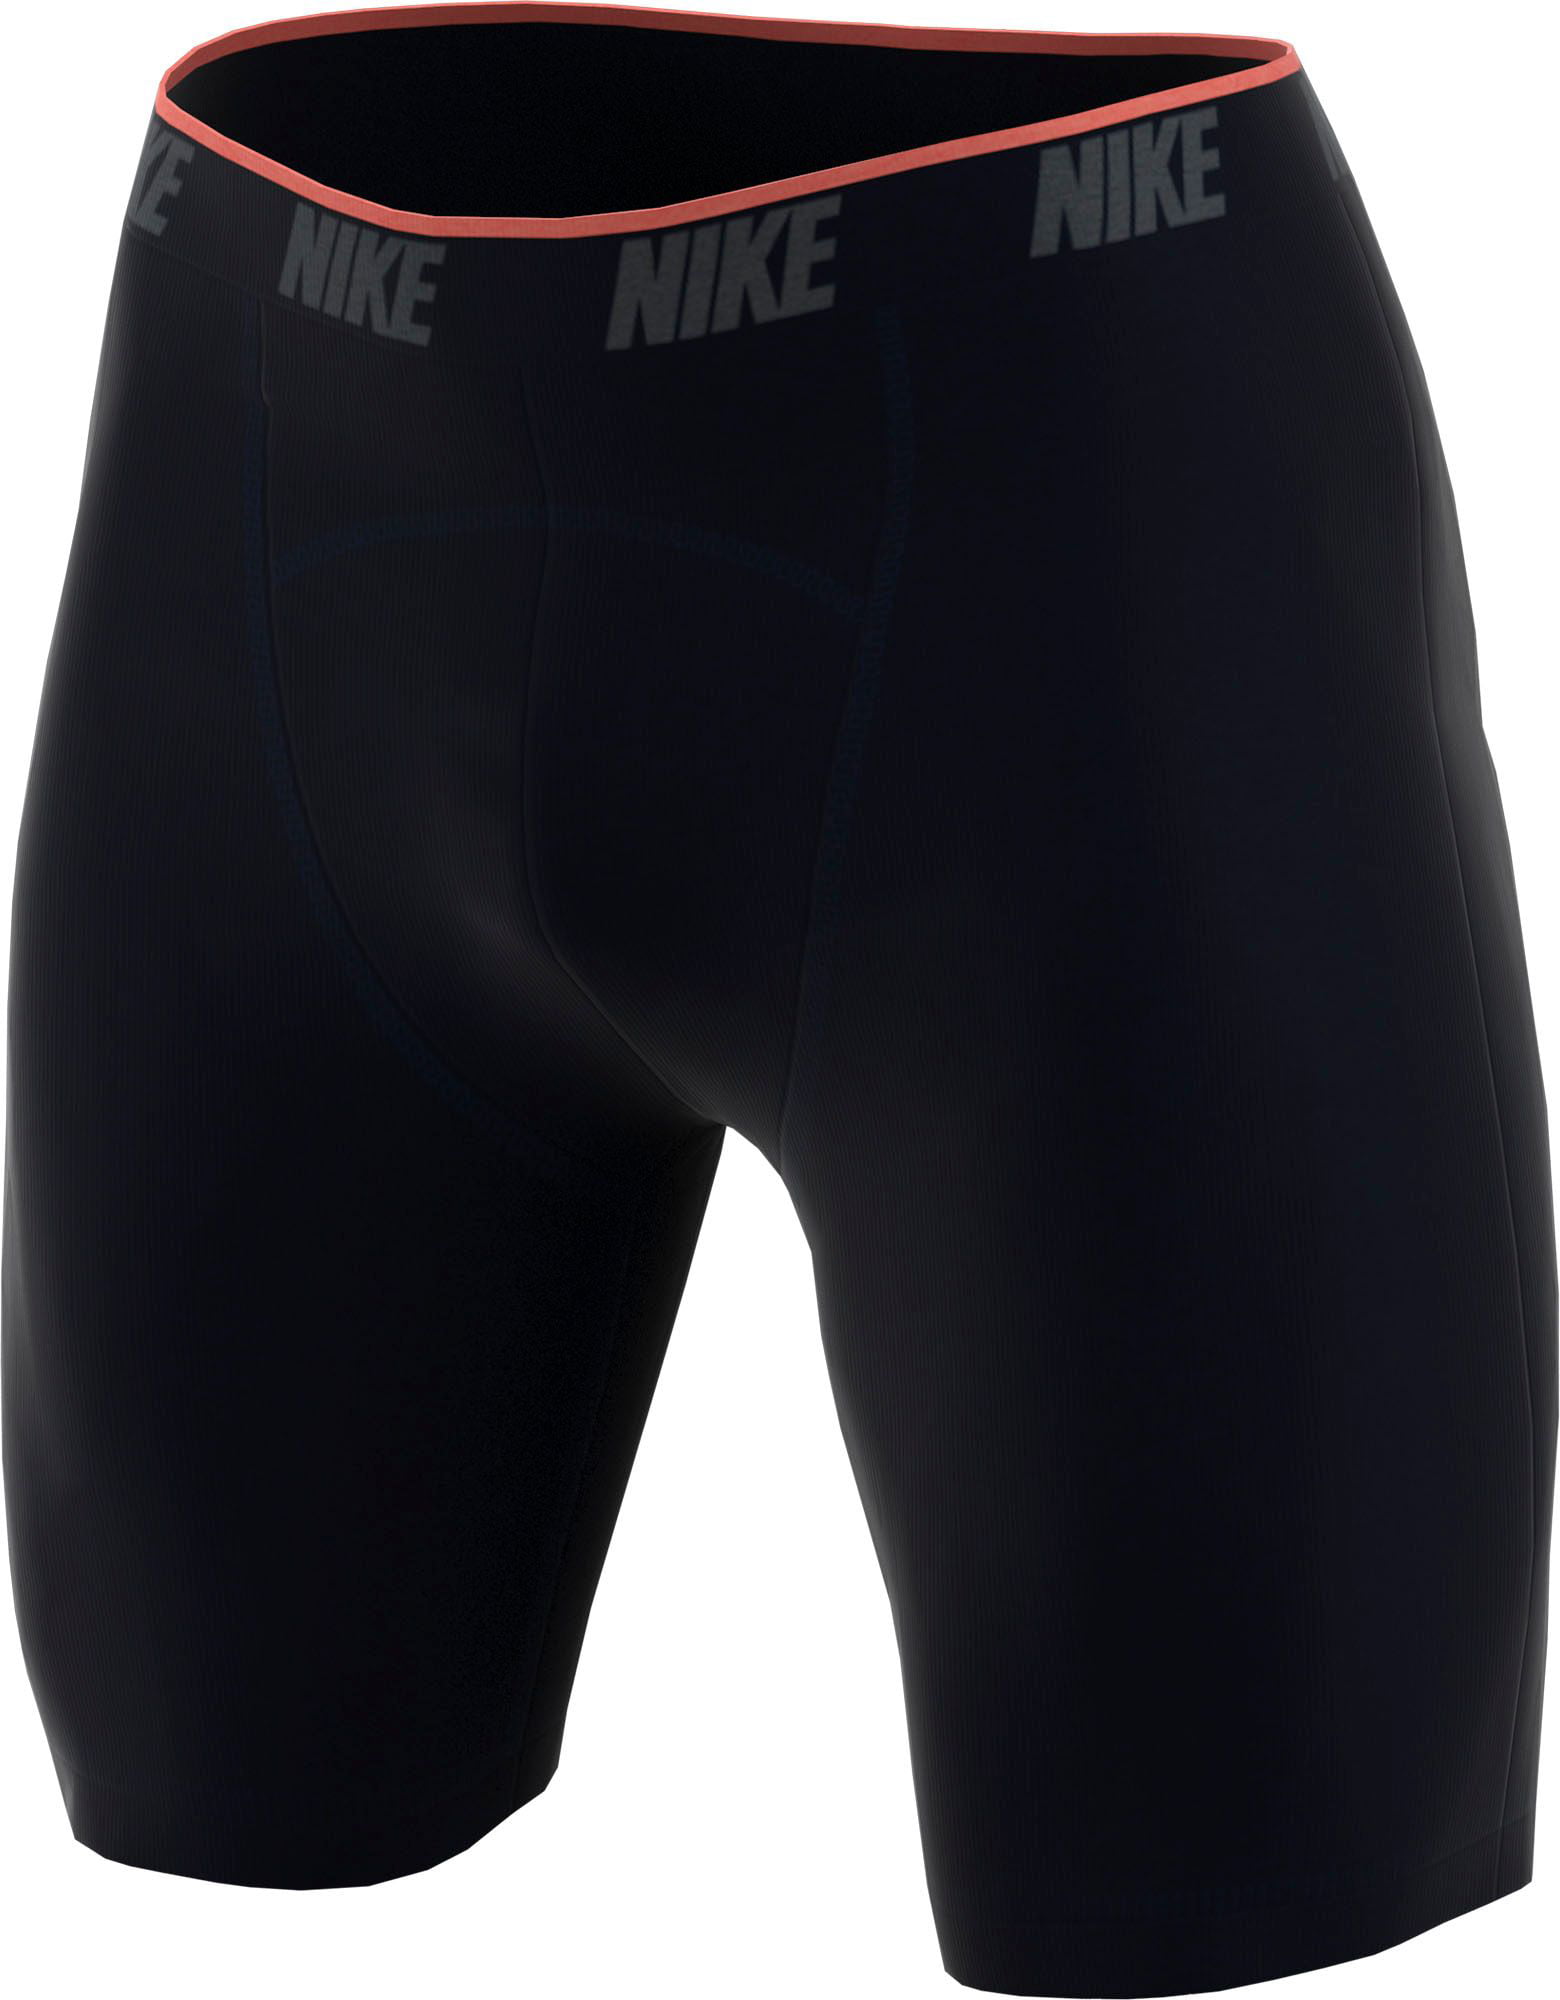 Nike Men's Long Boxer Briefs (2 Pack) AJ1843-010 Black 